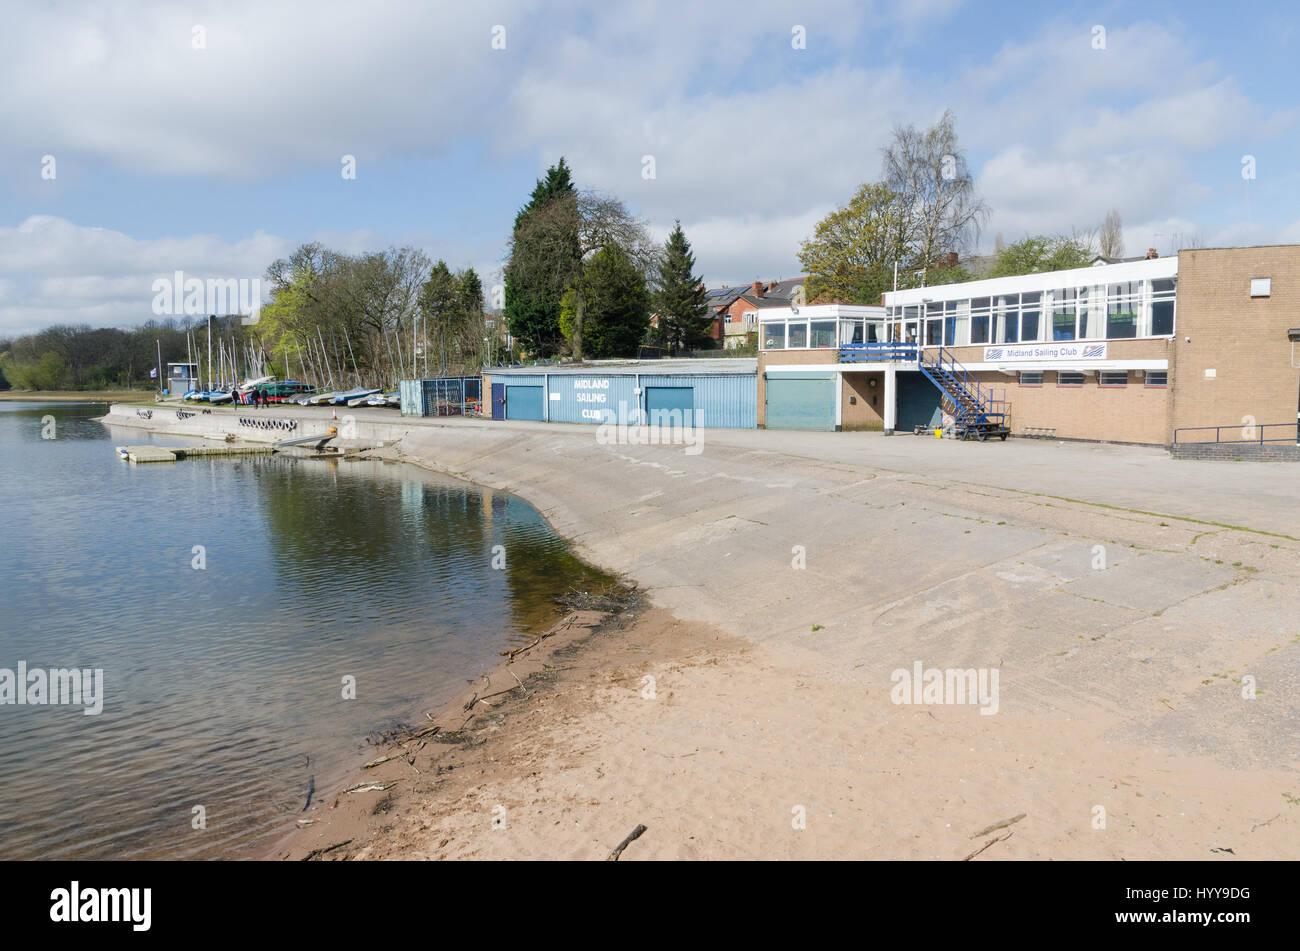 Midland Sailing Club clubhouse at Edgbaston Reservoir in Birmingham Stock Photo